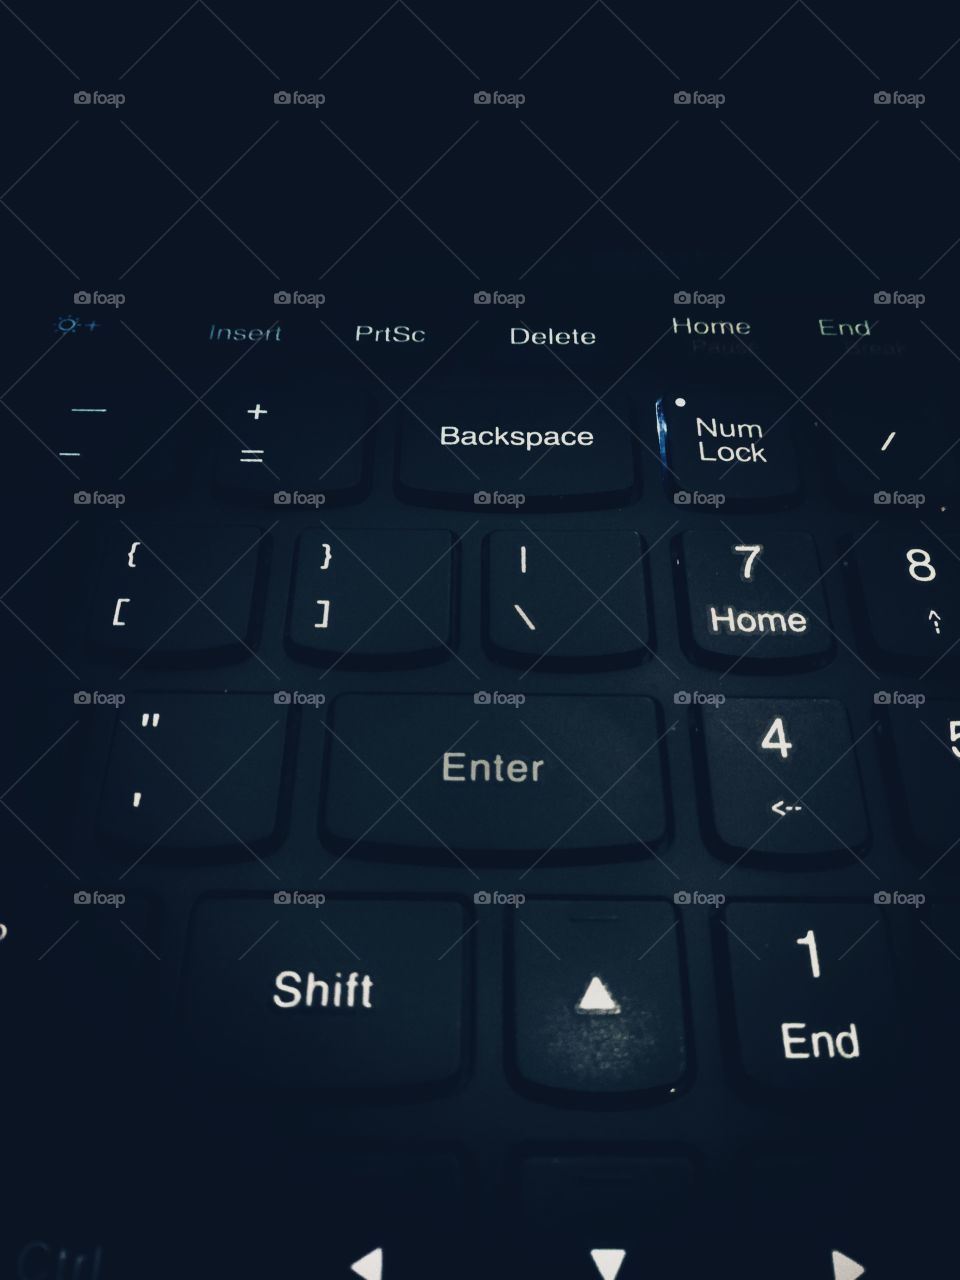 Enter into keyboard